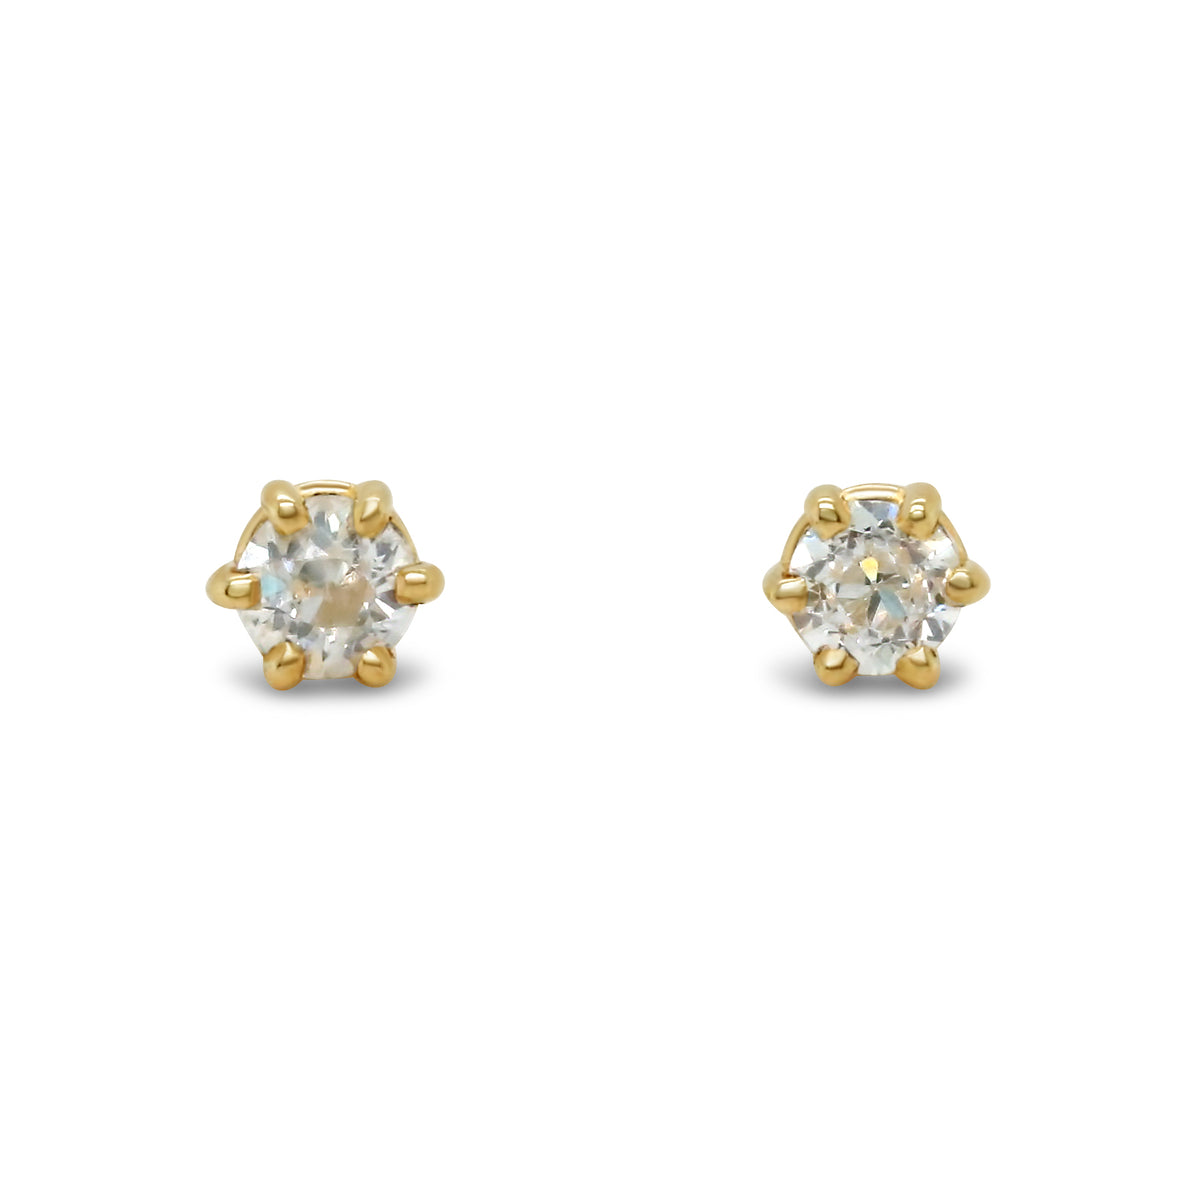 14k yellow gold six prong set warm old European cut diamond stud earrings